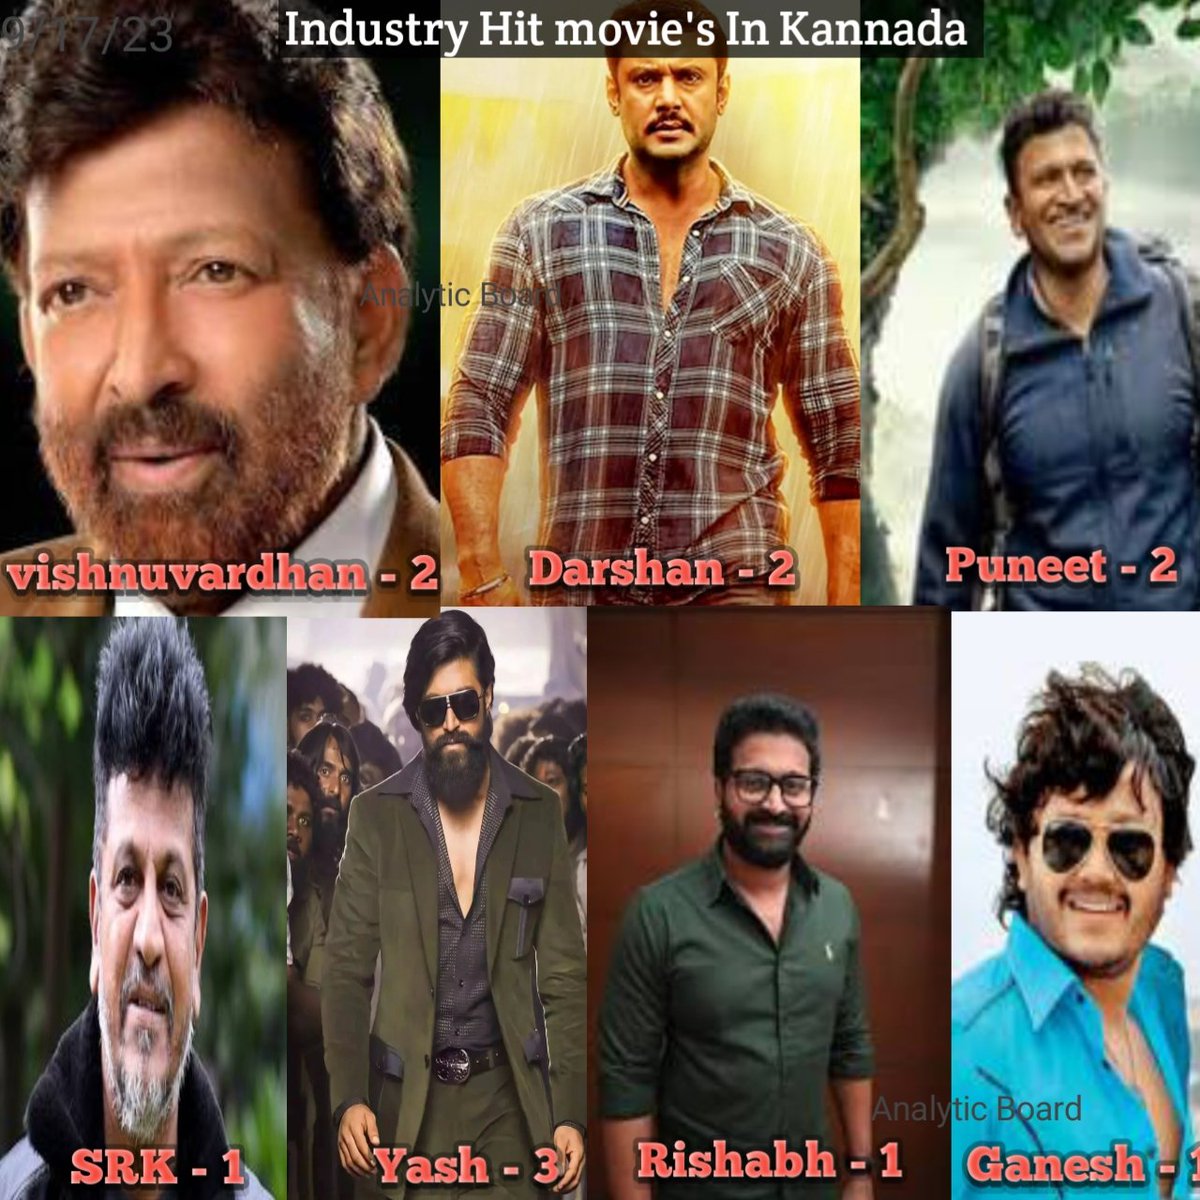 Industry Hit Movies in #Kannada(2000-2023)

2000 - #Yajamana
2004 - #Apthamitra
2005 - #Jogi
2006 - #MungaruMale
2012 - #KVSR
2013 - #BulBul
2014 - #MrAndMrsRamachari
2017 - #Rajakumara
2018 - #KGF1
2022 - #James
2022 - #KGF2
2022 - #Kantara 

#DBoss #Shivarajkumar #Yash #Puneeth